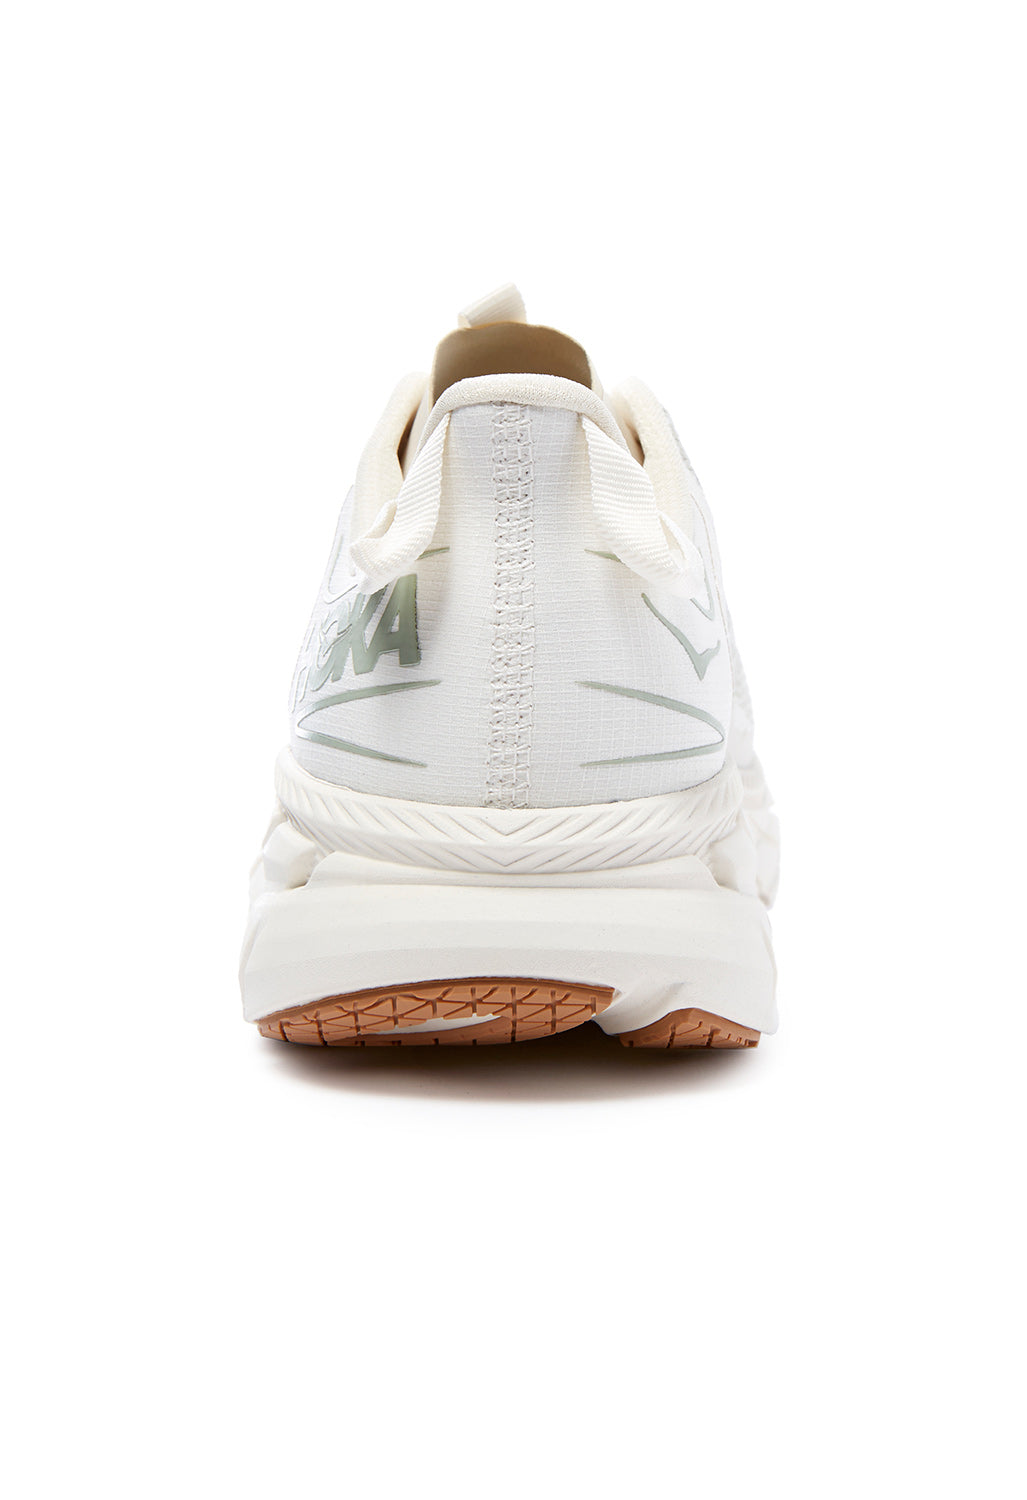 Hoka Clifton LS Satisfy Running Shoes - Celadon Tint / Whisper White